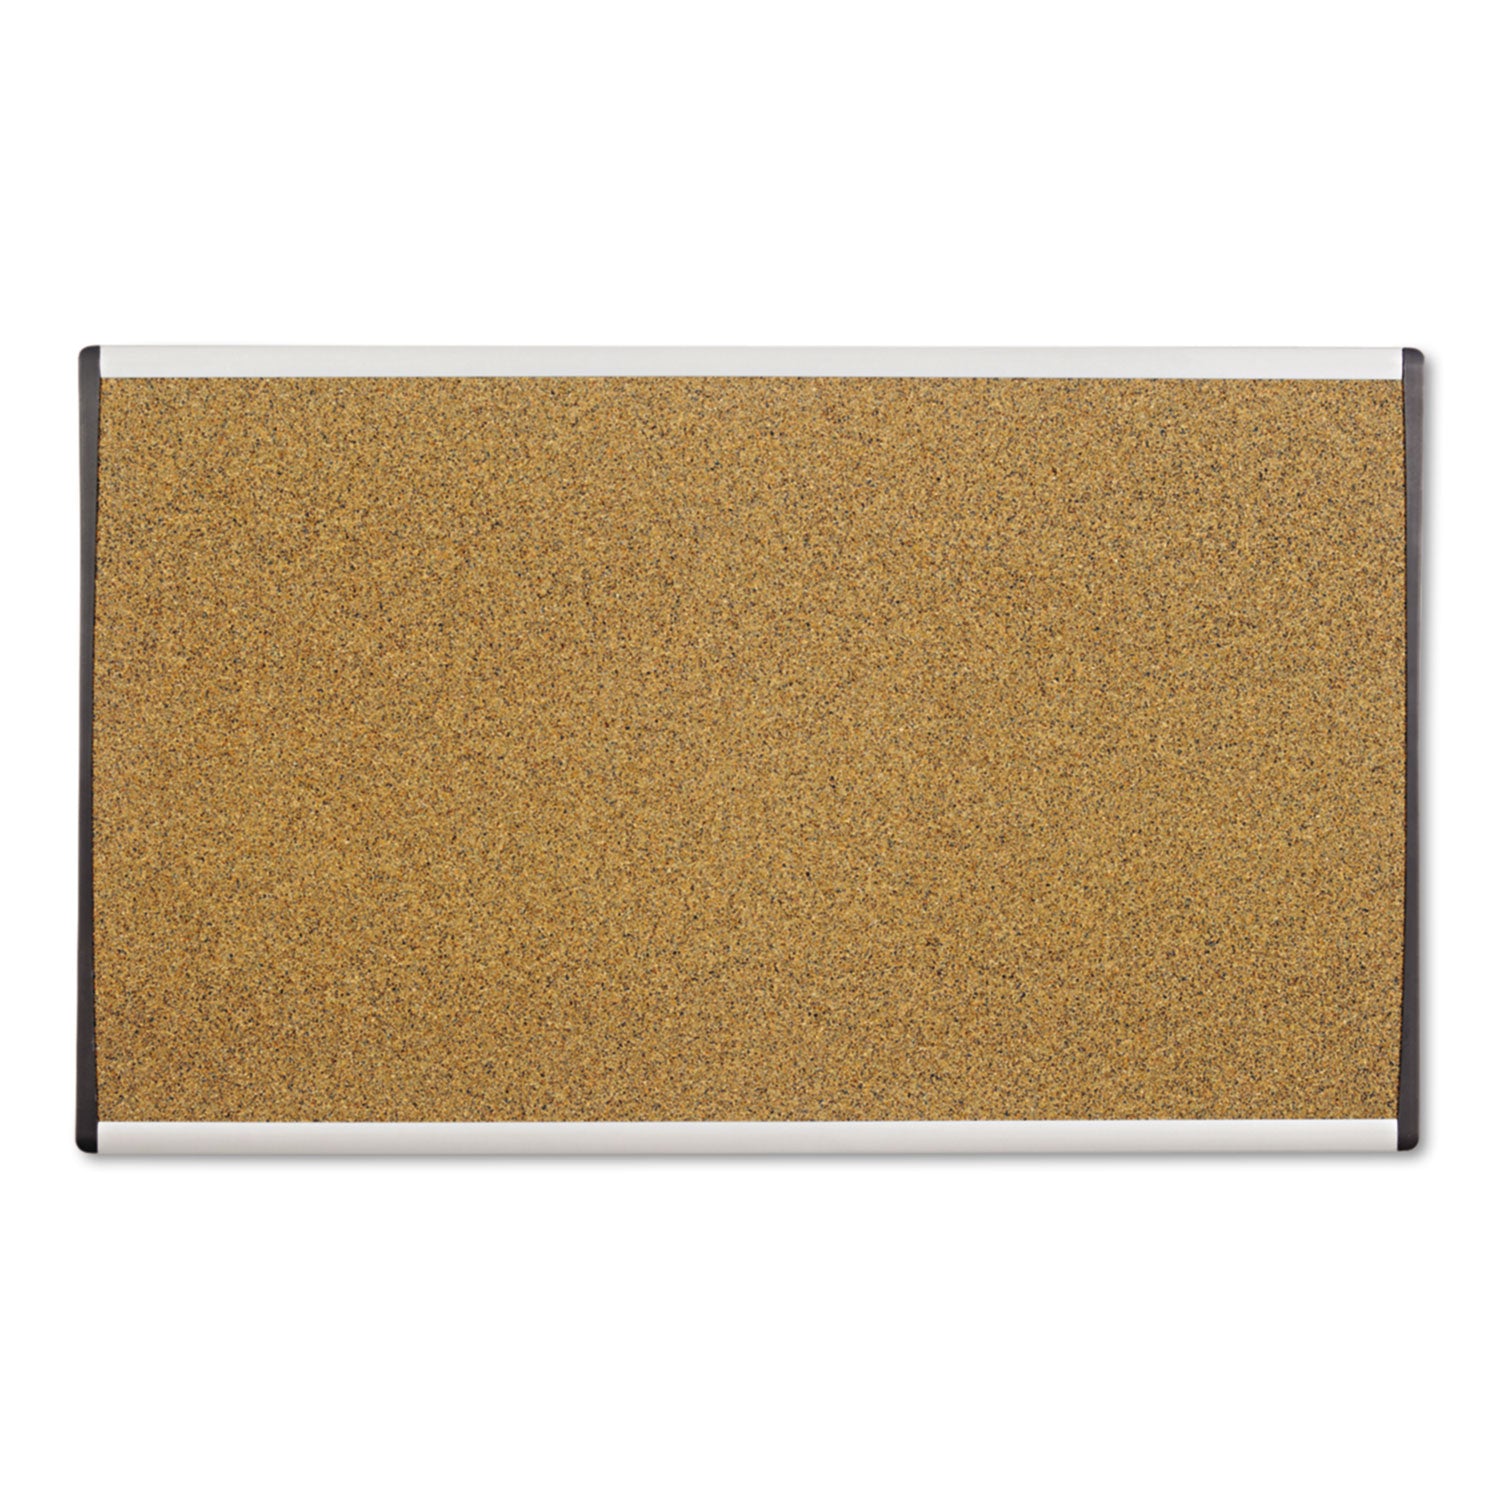 ARC Frame Cubicle Cork Board, 30 x 18, Tan Surface, Silver Aluminum Frame - 